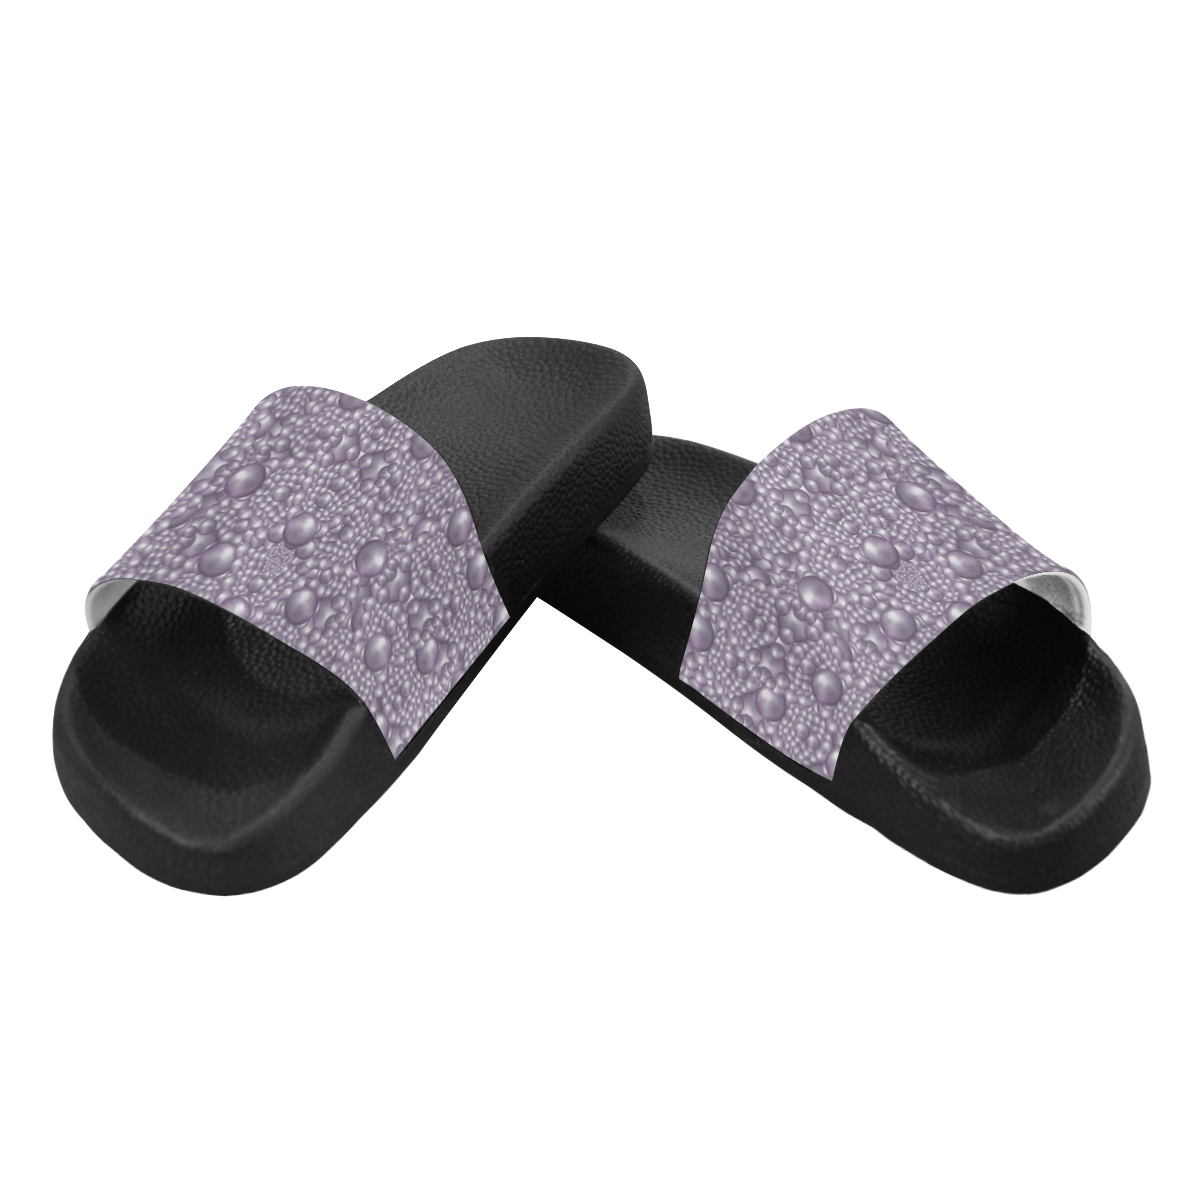 festive purple pearls Men's Slide Sandals (Model 057)